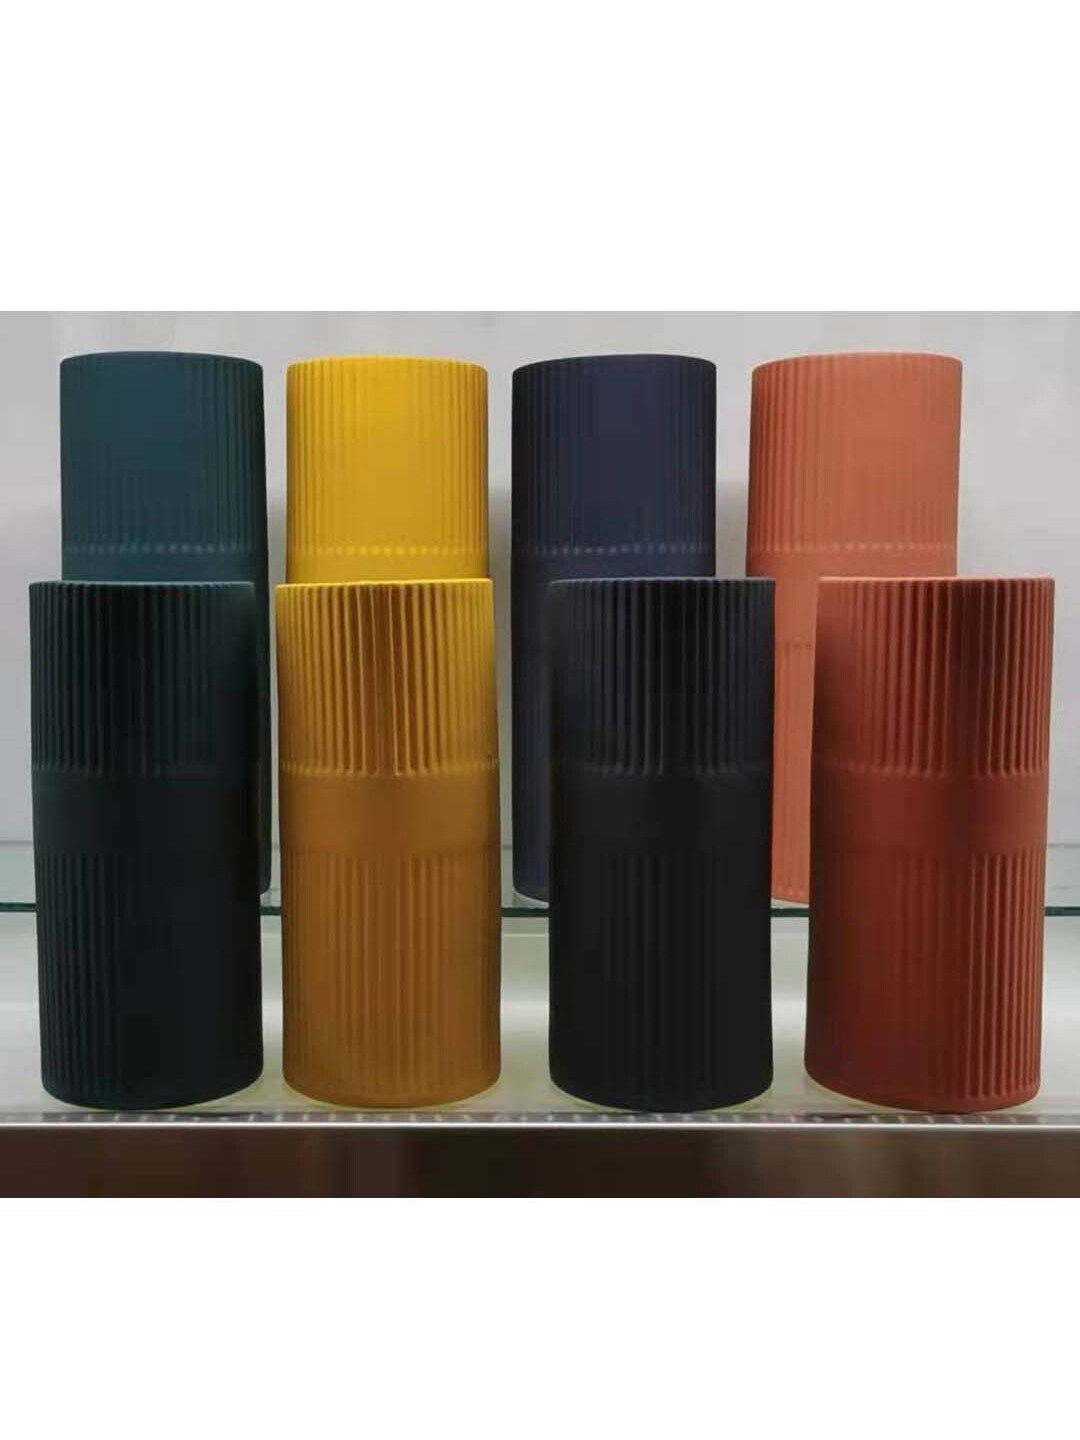 MARKET99 Green Textured Ceramic Flower Vase Price in India